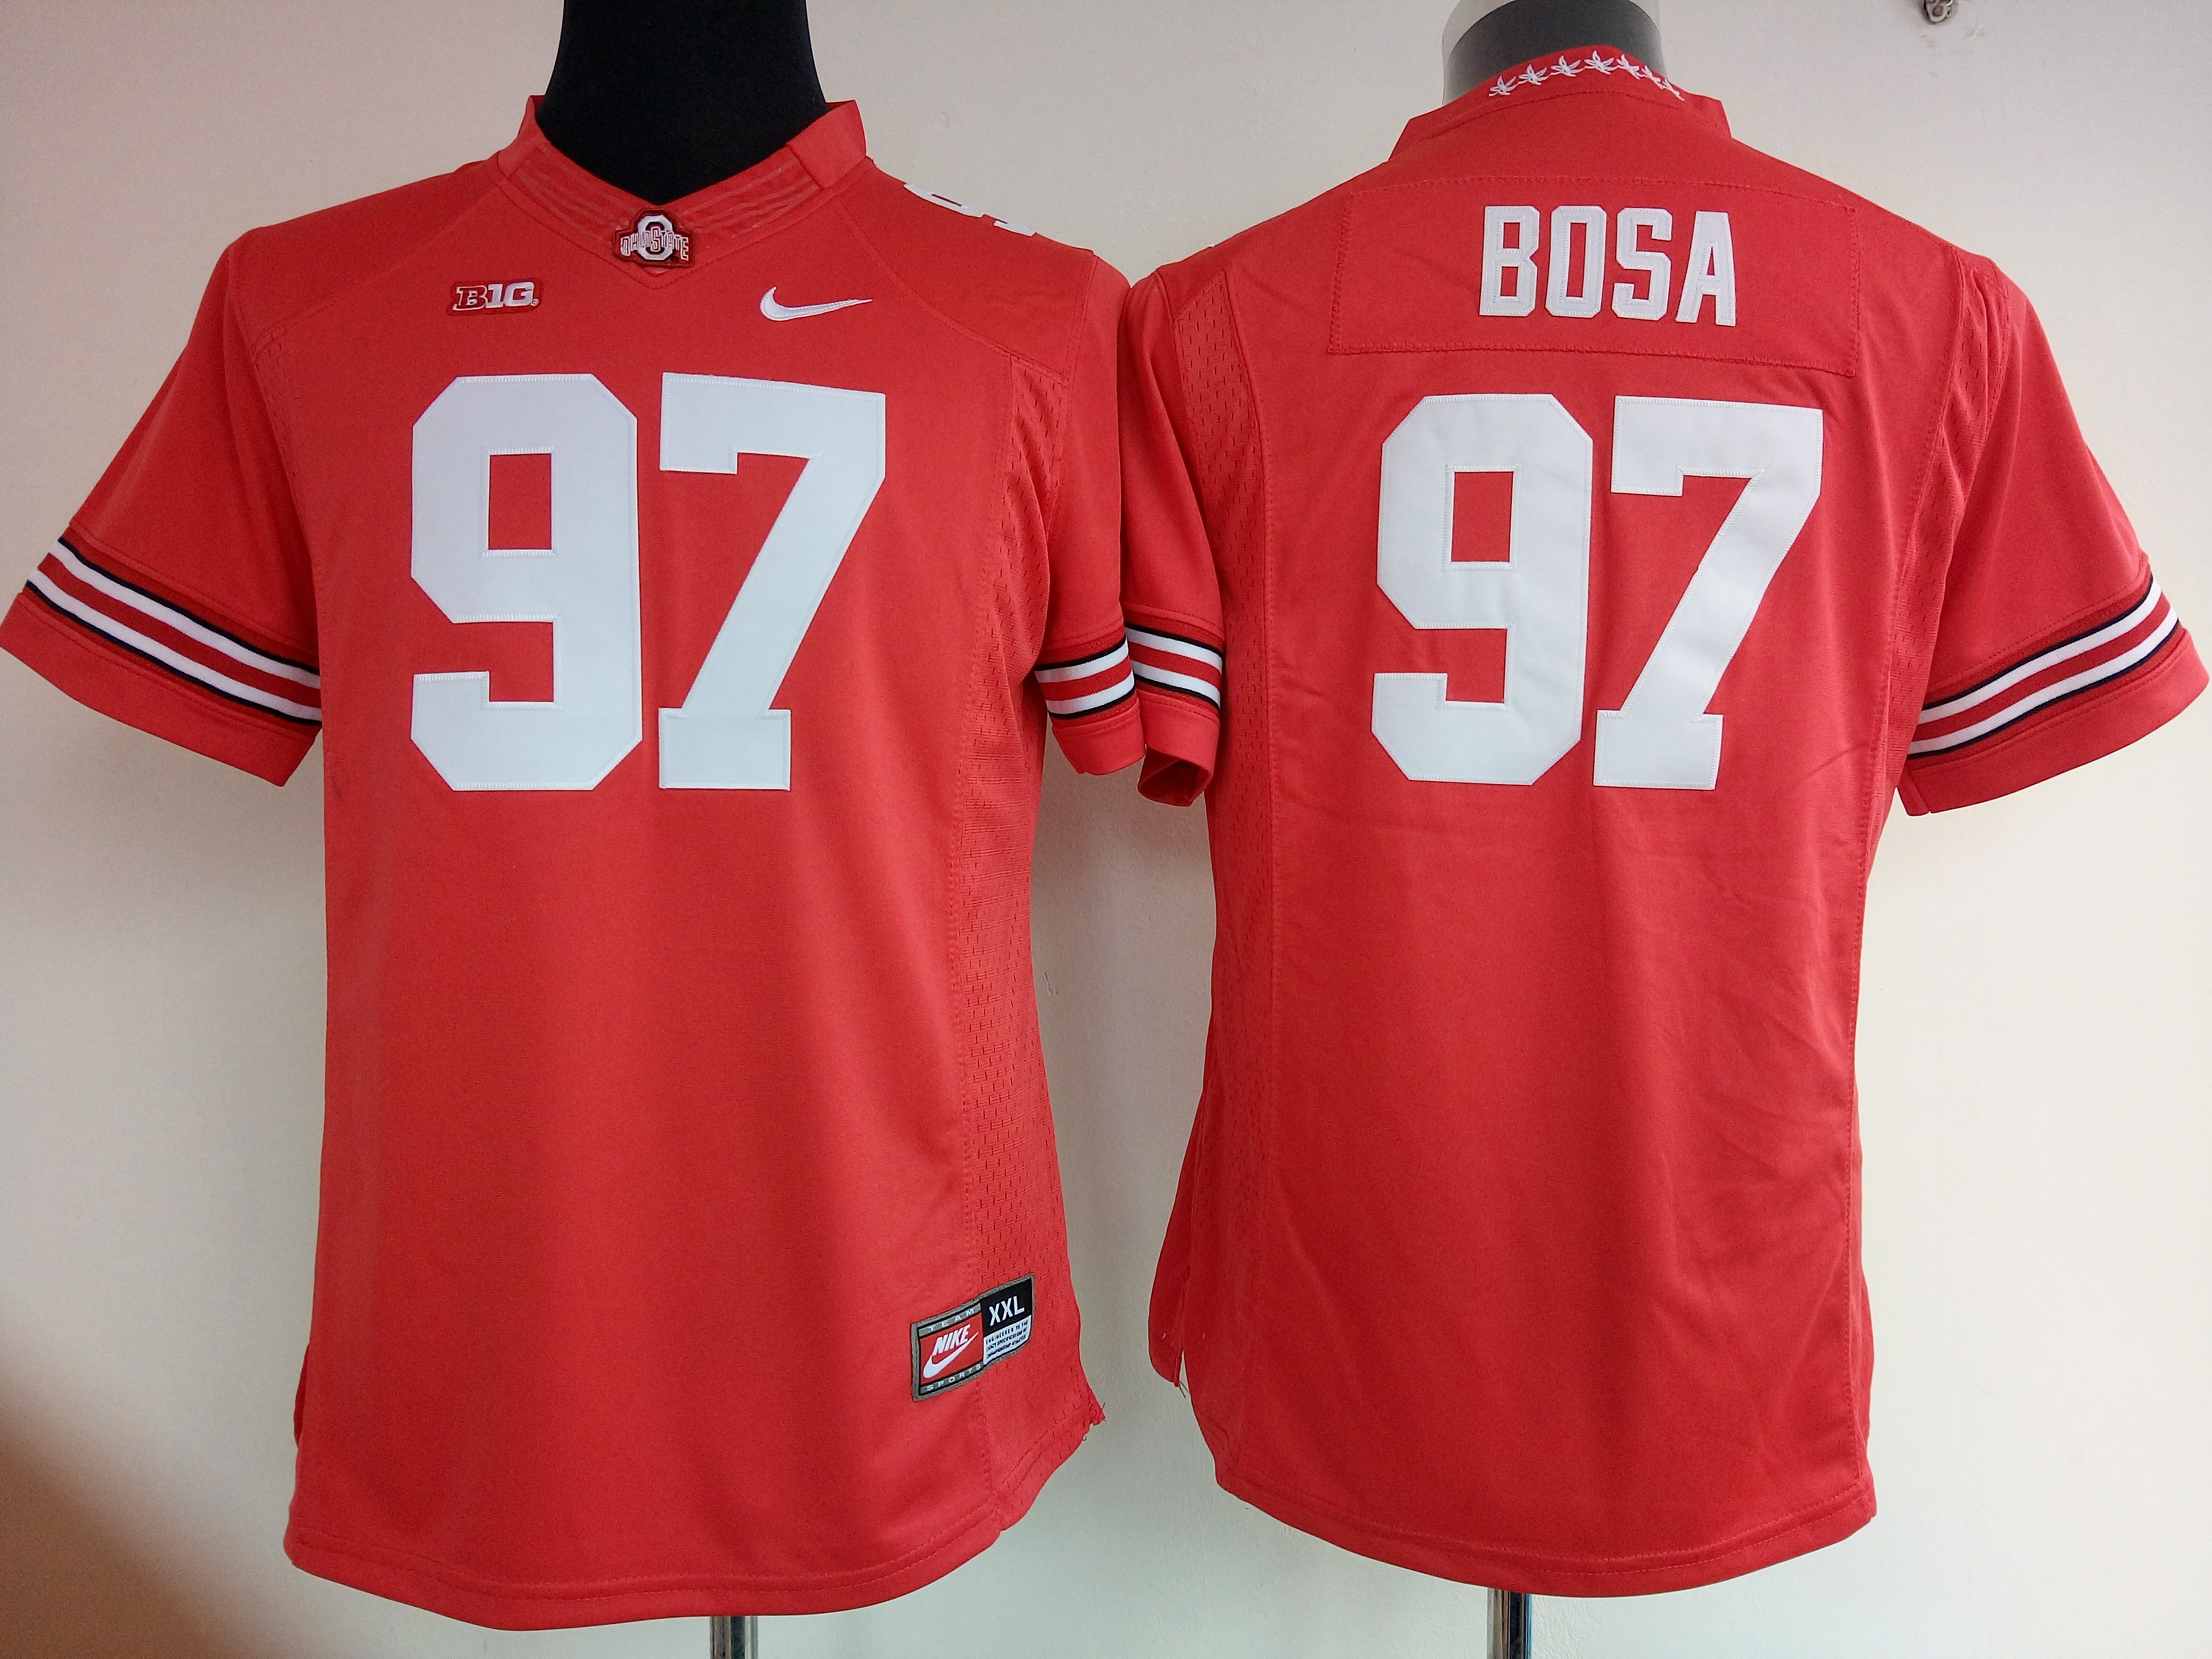 NCAA Womens Ohio State Buckeyes Red #97 bosa jerseys